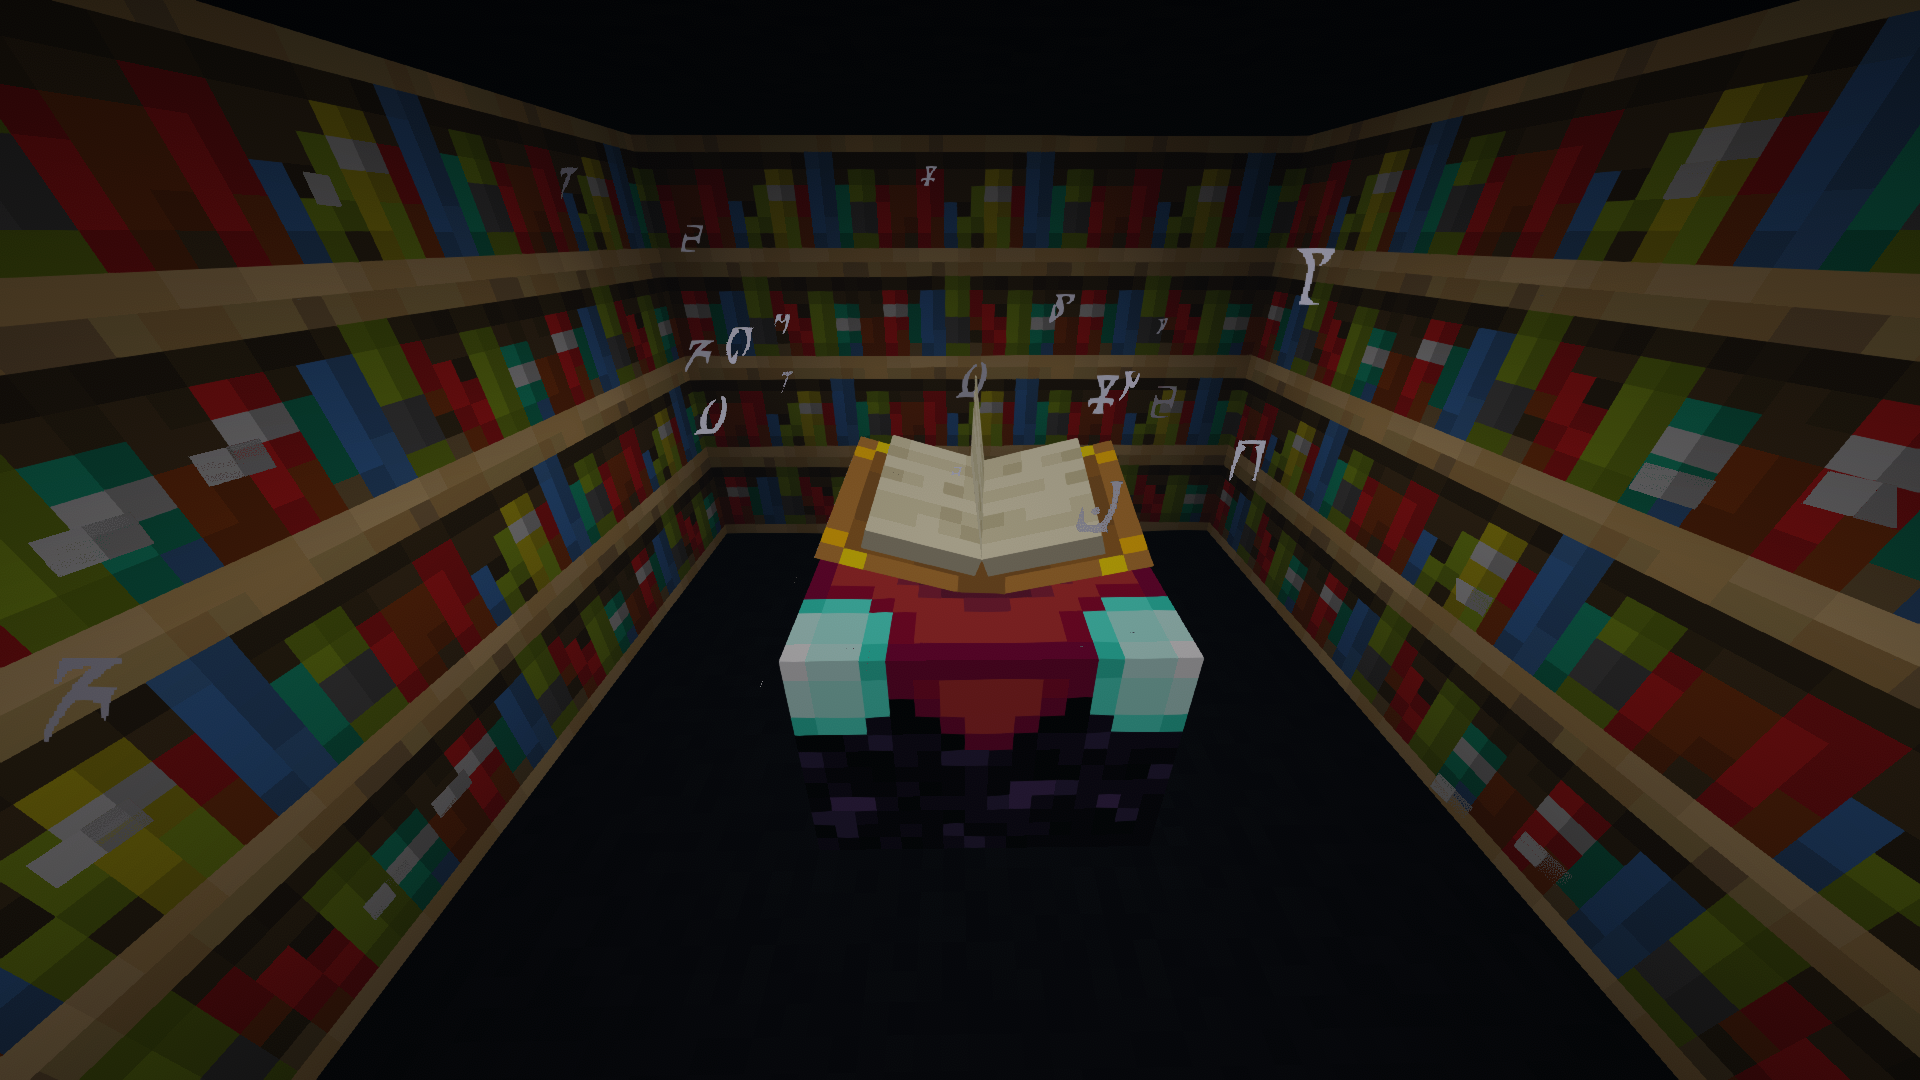 Bookshelf Particles